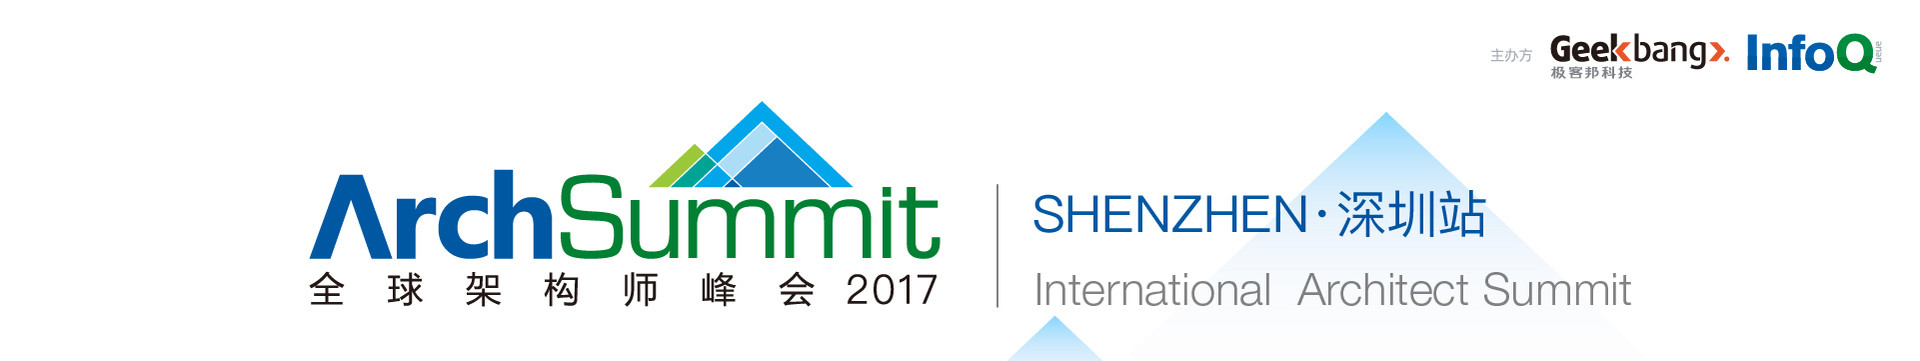 ArchSummit全球架构师峰会（深圳站）——实时处理技术与创新业务架构专场